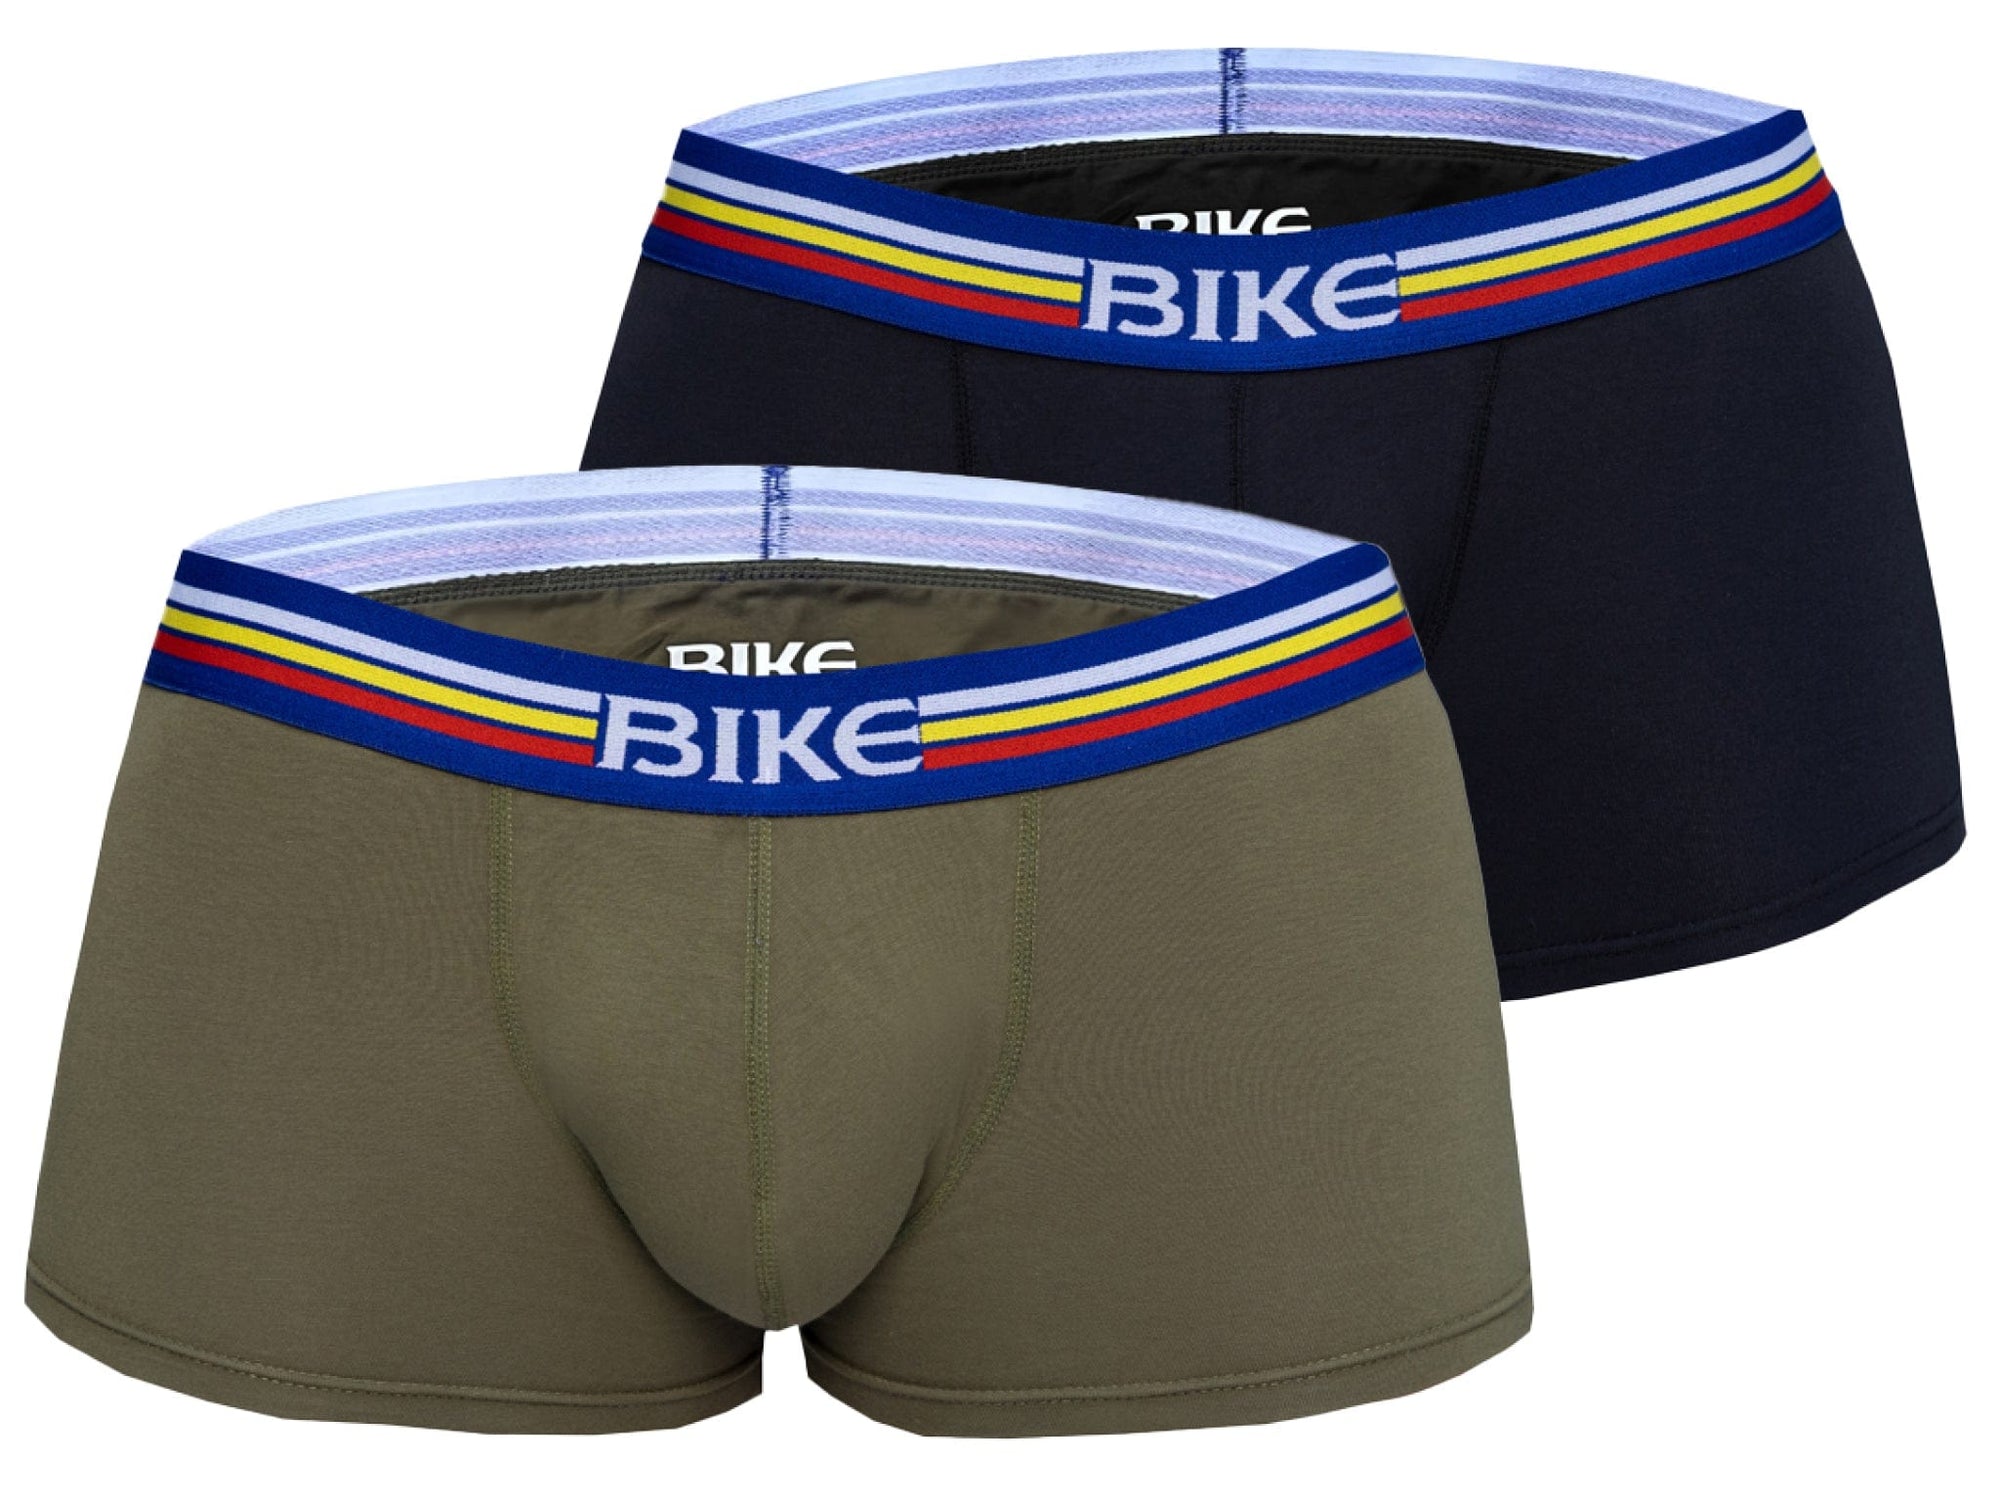 Black and olive Bike Athletic underwear trunk